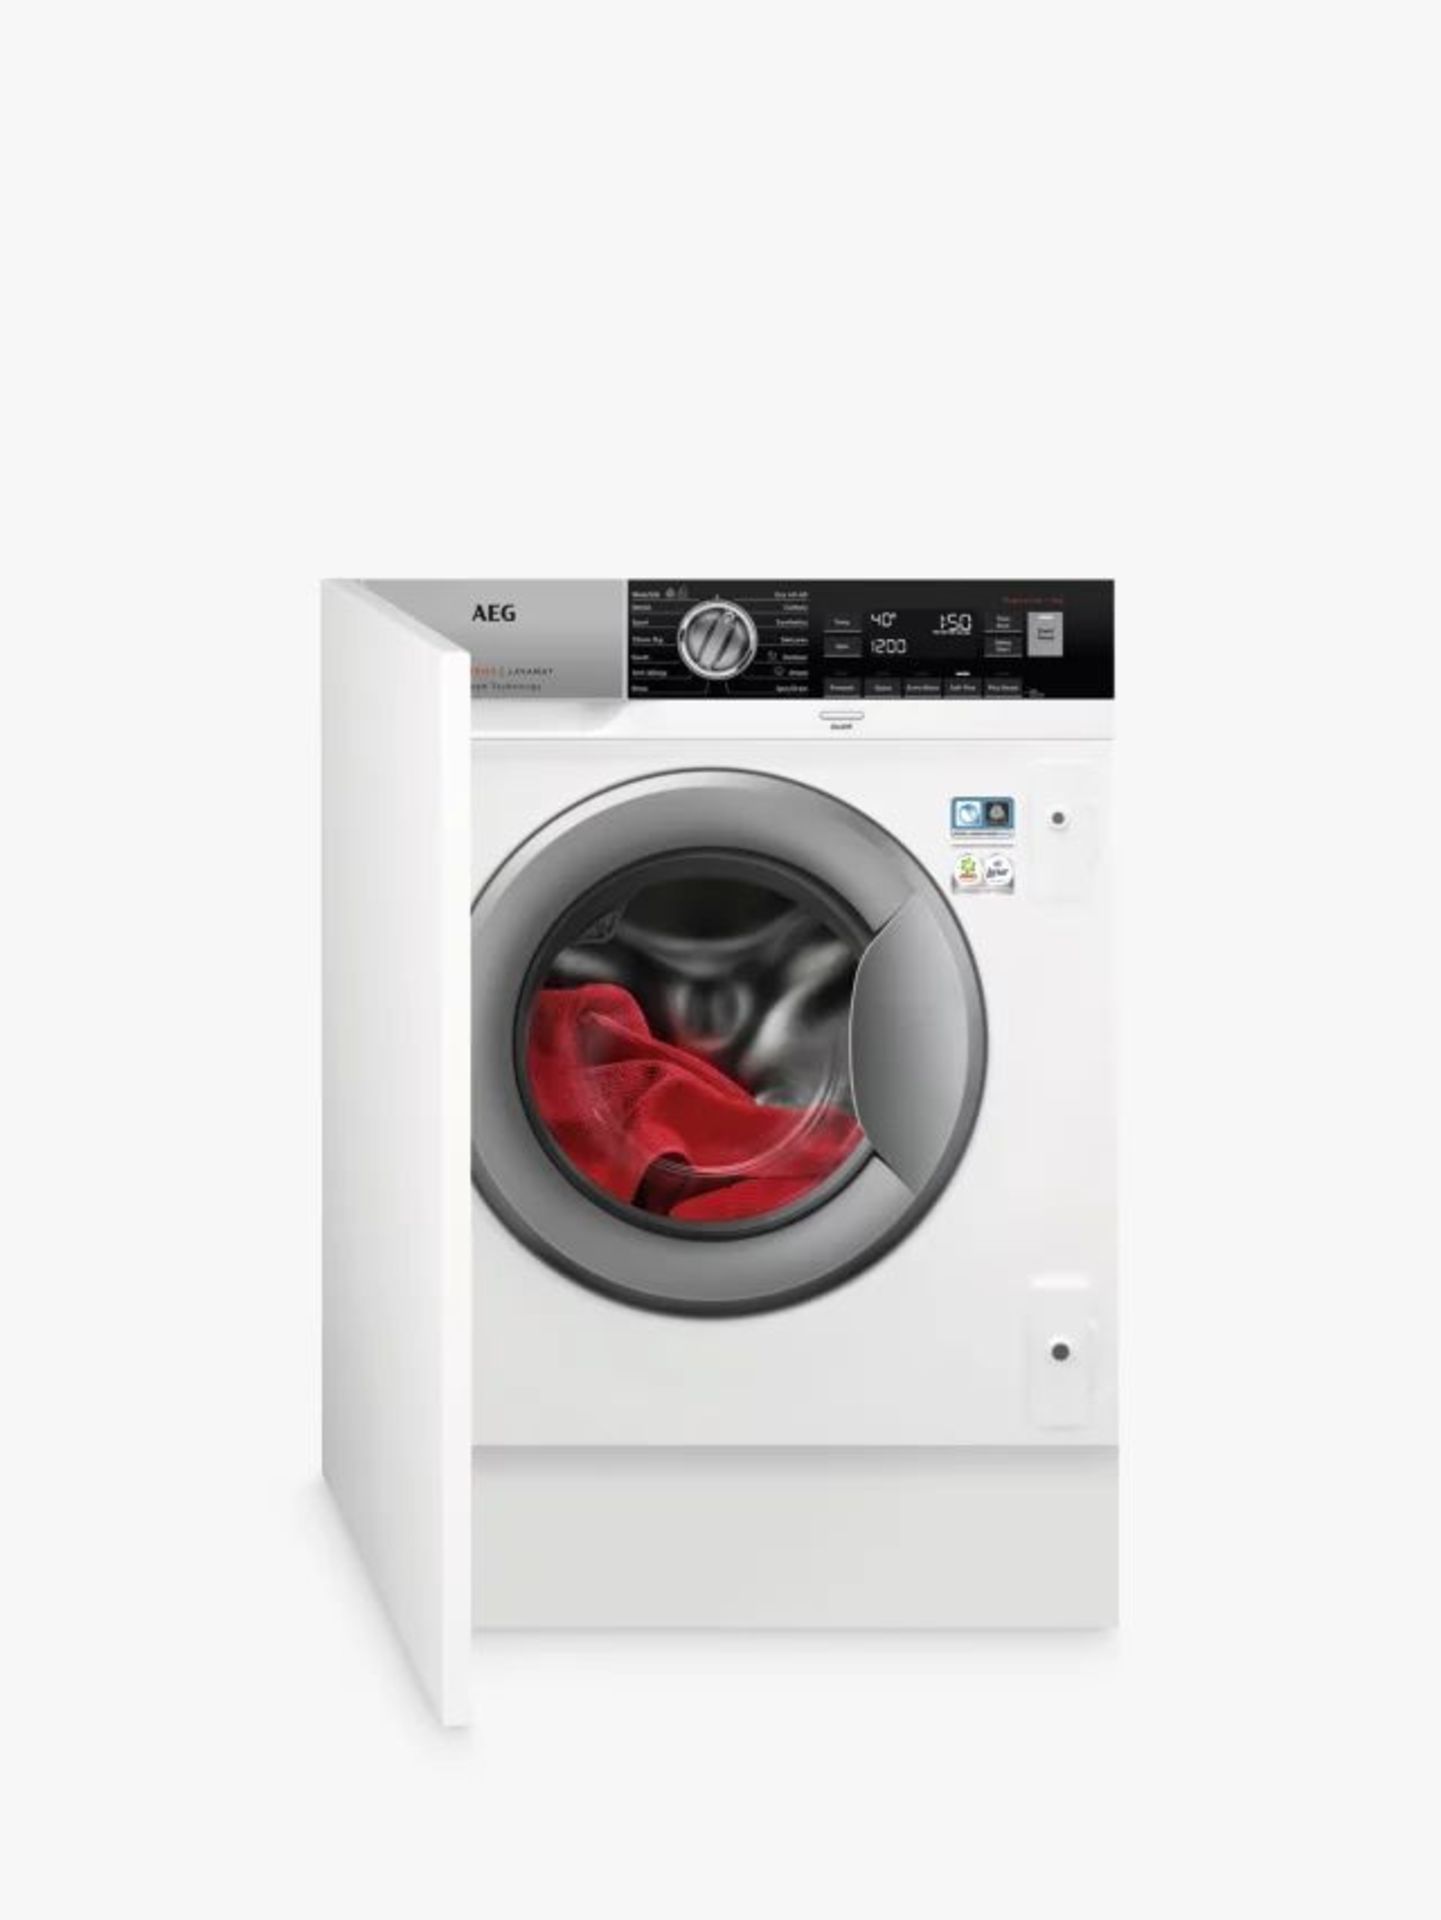 AEG 7000 L7FC8432BI Integrated Washing Machine, 8kg Load, 1400rpm Spin, White. - H/S. RRP £999.00.